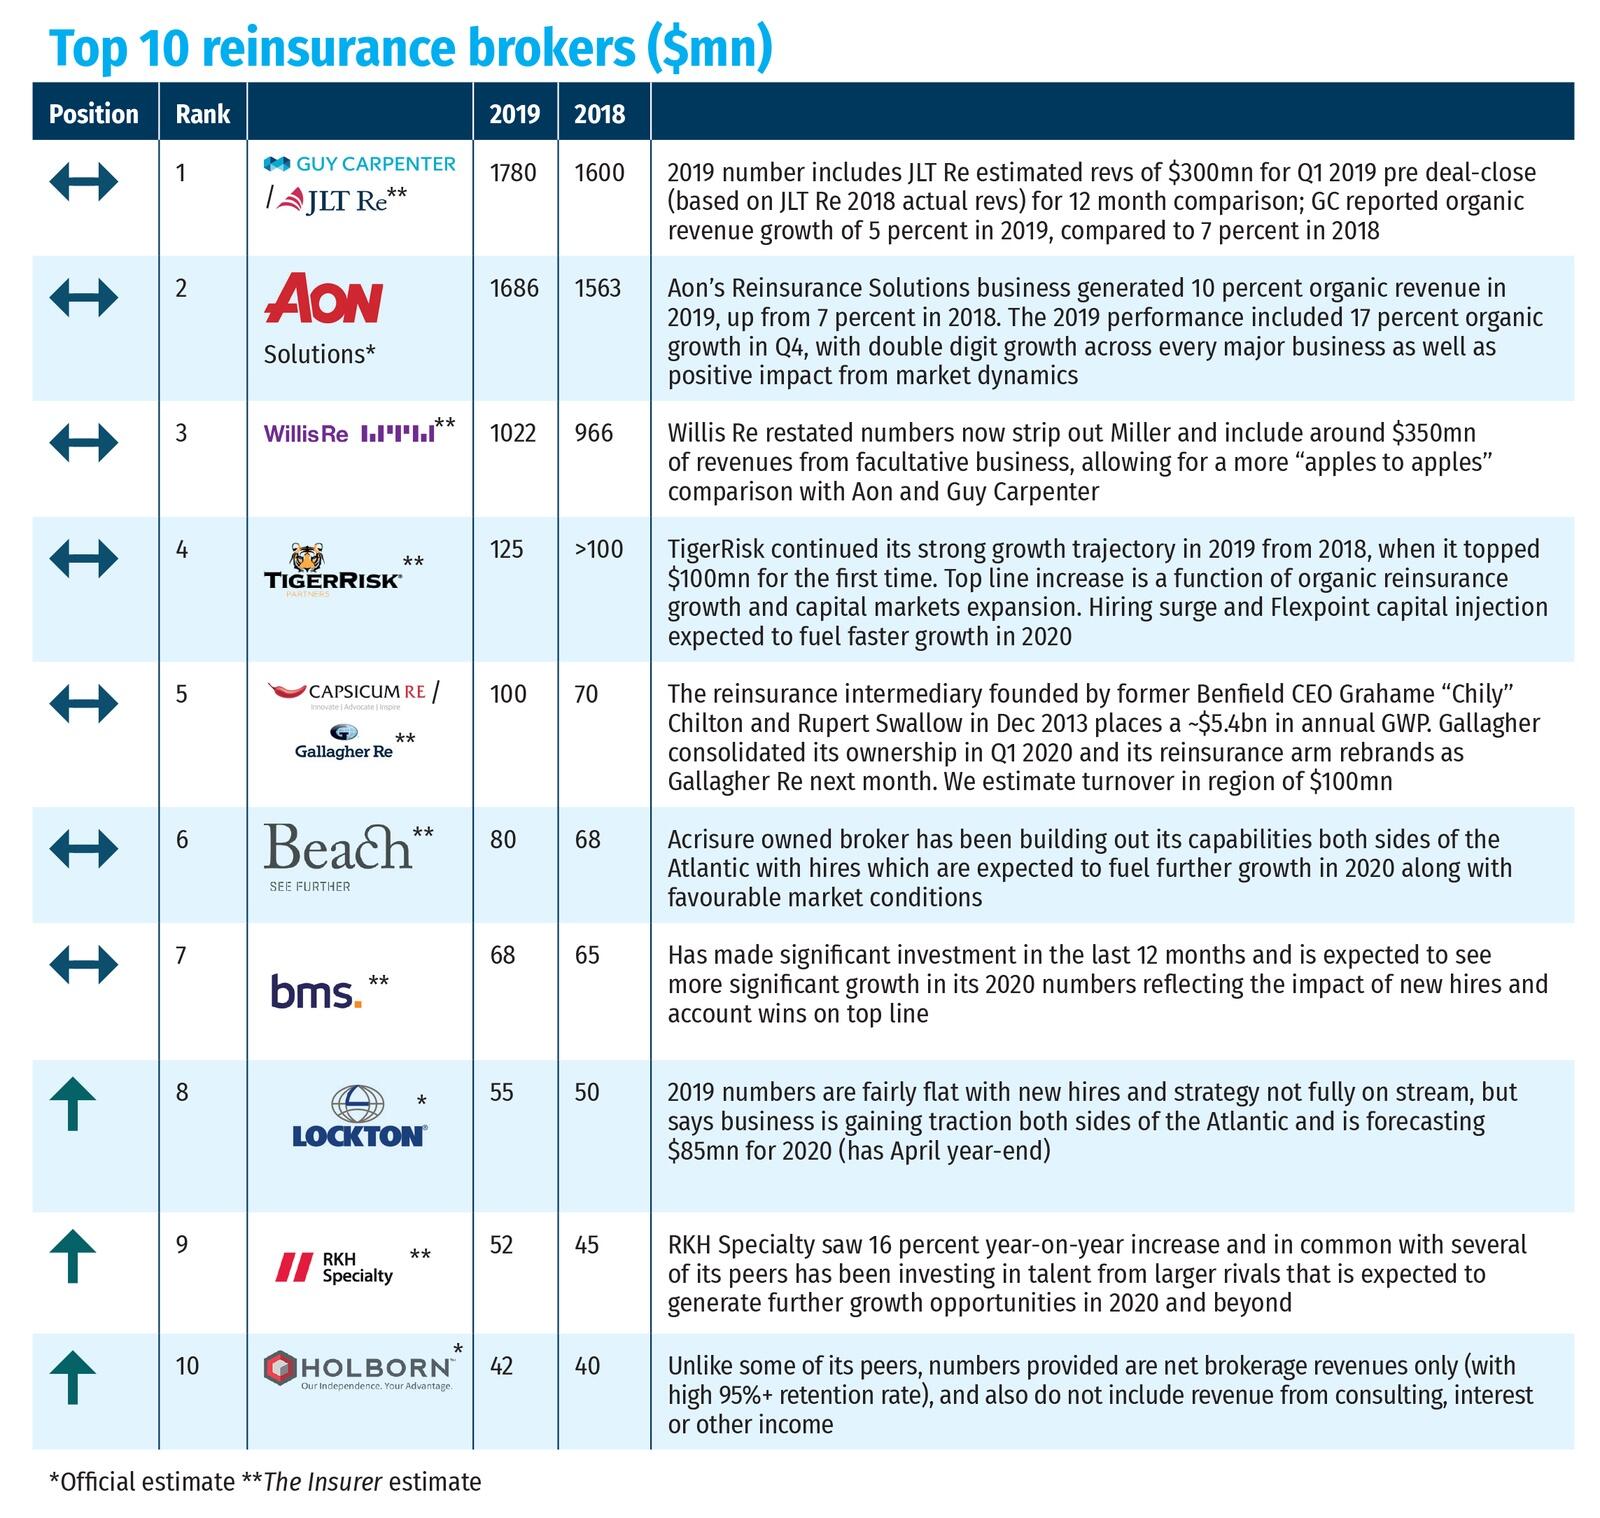 Top 10 reinsurance brokers ($mn)